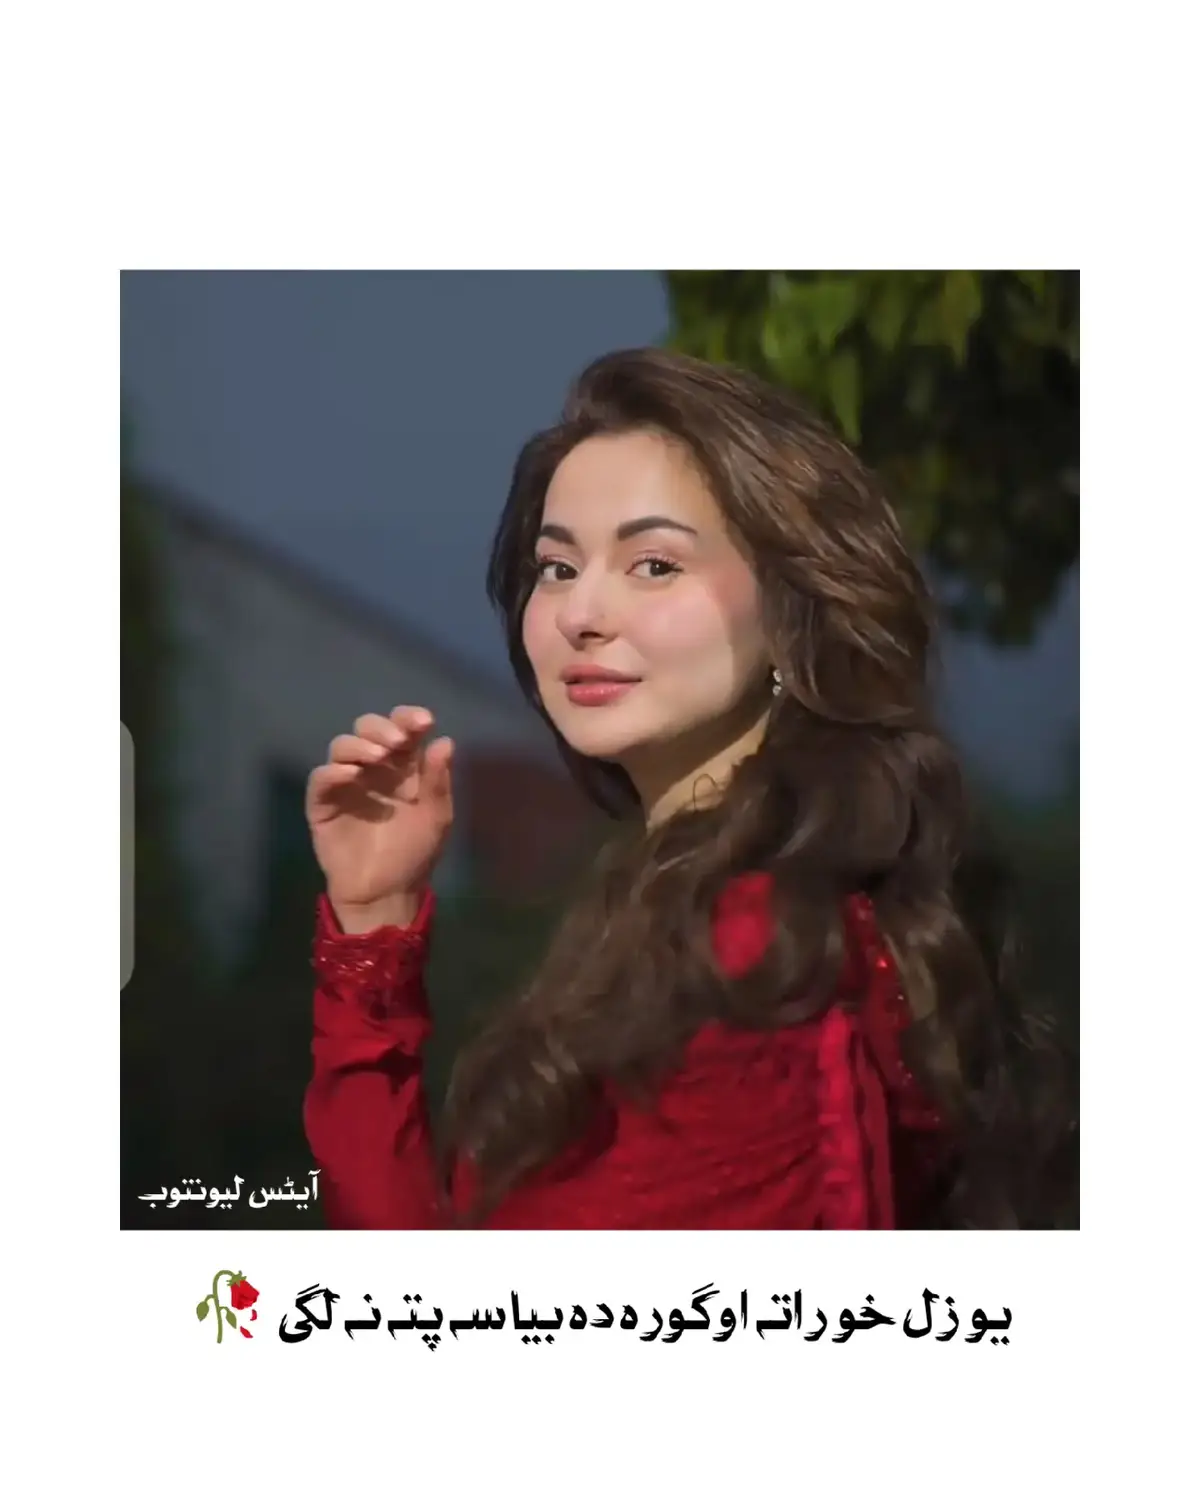 𝗬𝗮𝘄 𝗭𝗮𝗹 𝗞𝗵𝘂 𝗥𝗮𝘁𝗮 𝗢𝗼𝗴𝗼𝗿𝗮 𝗗𝗮 𝗕𝘆𝗮 𝗦𝗮 𝗣𝗮𝘁𝗮 𝗡𝗮 𝗟𝗮𝗴𝗲𝗲👀🌱#fypシ #viral #viralvideo #its_Lewantob #foryoupage #tiktokpakistanoffical 